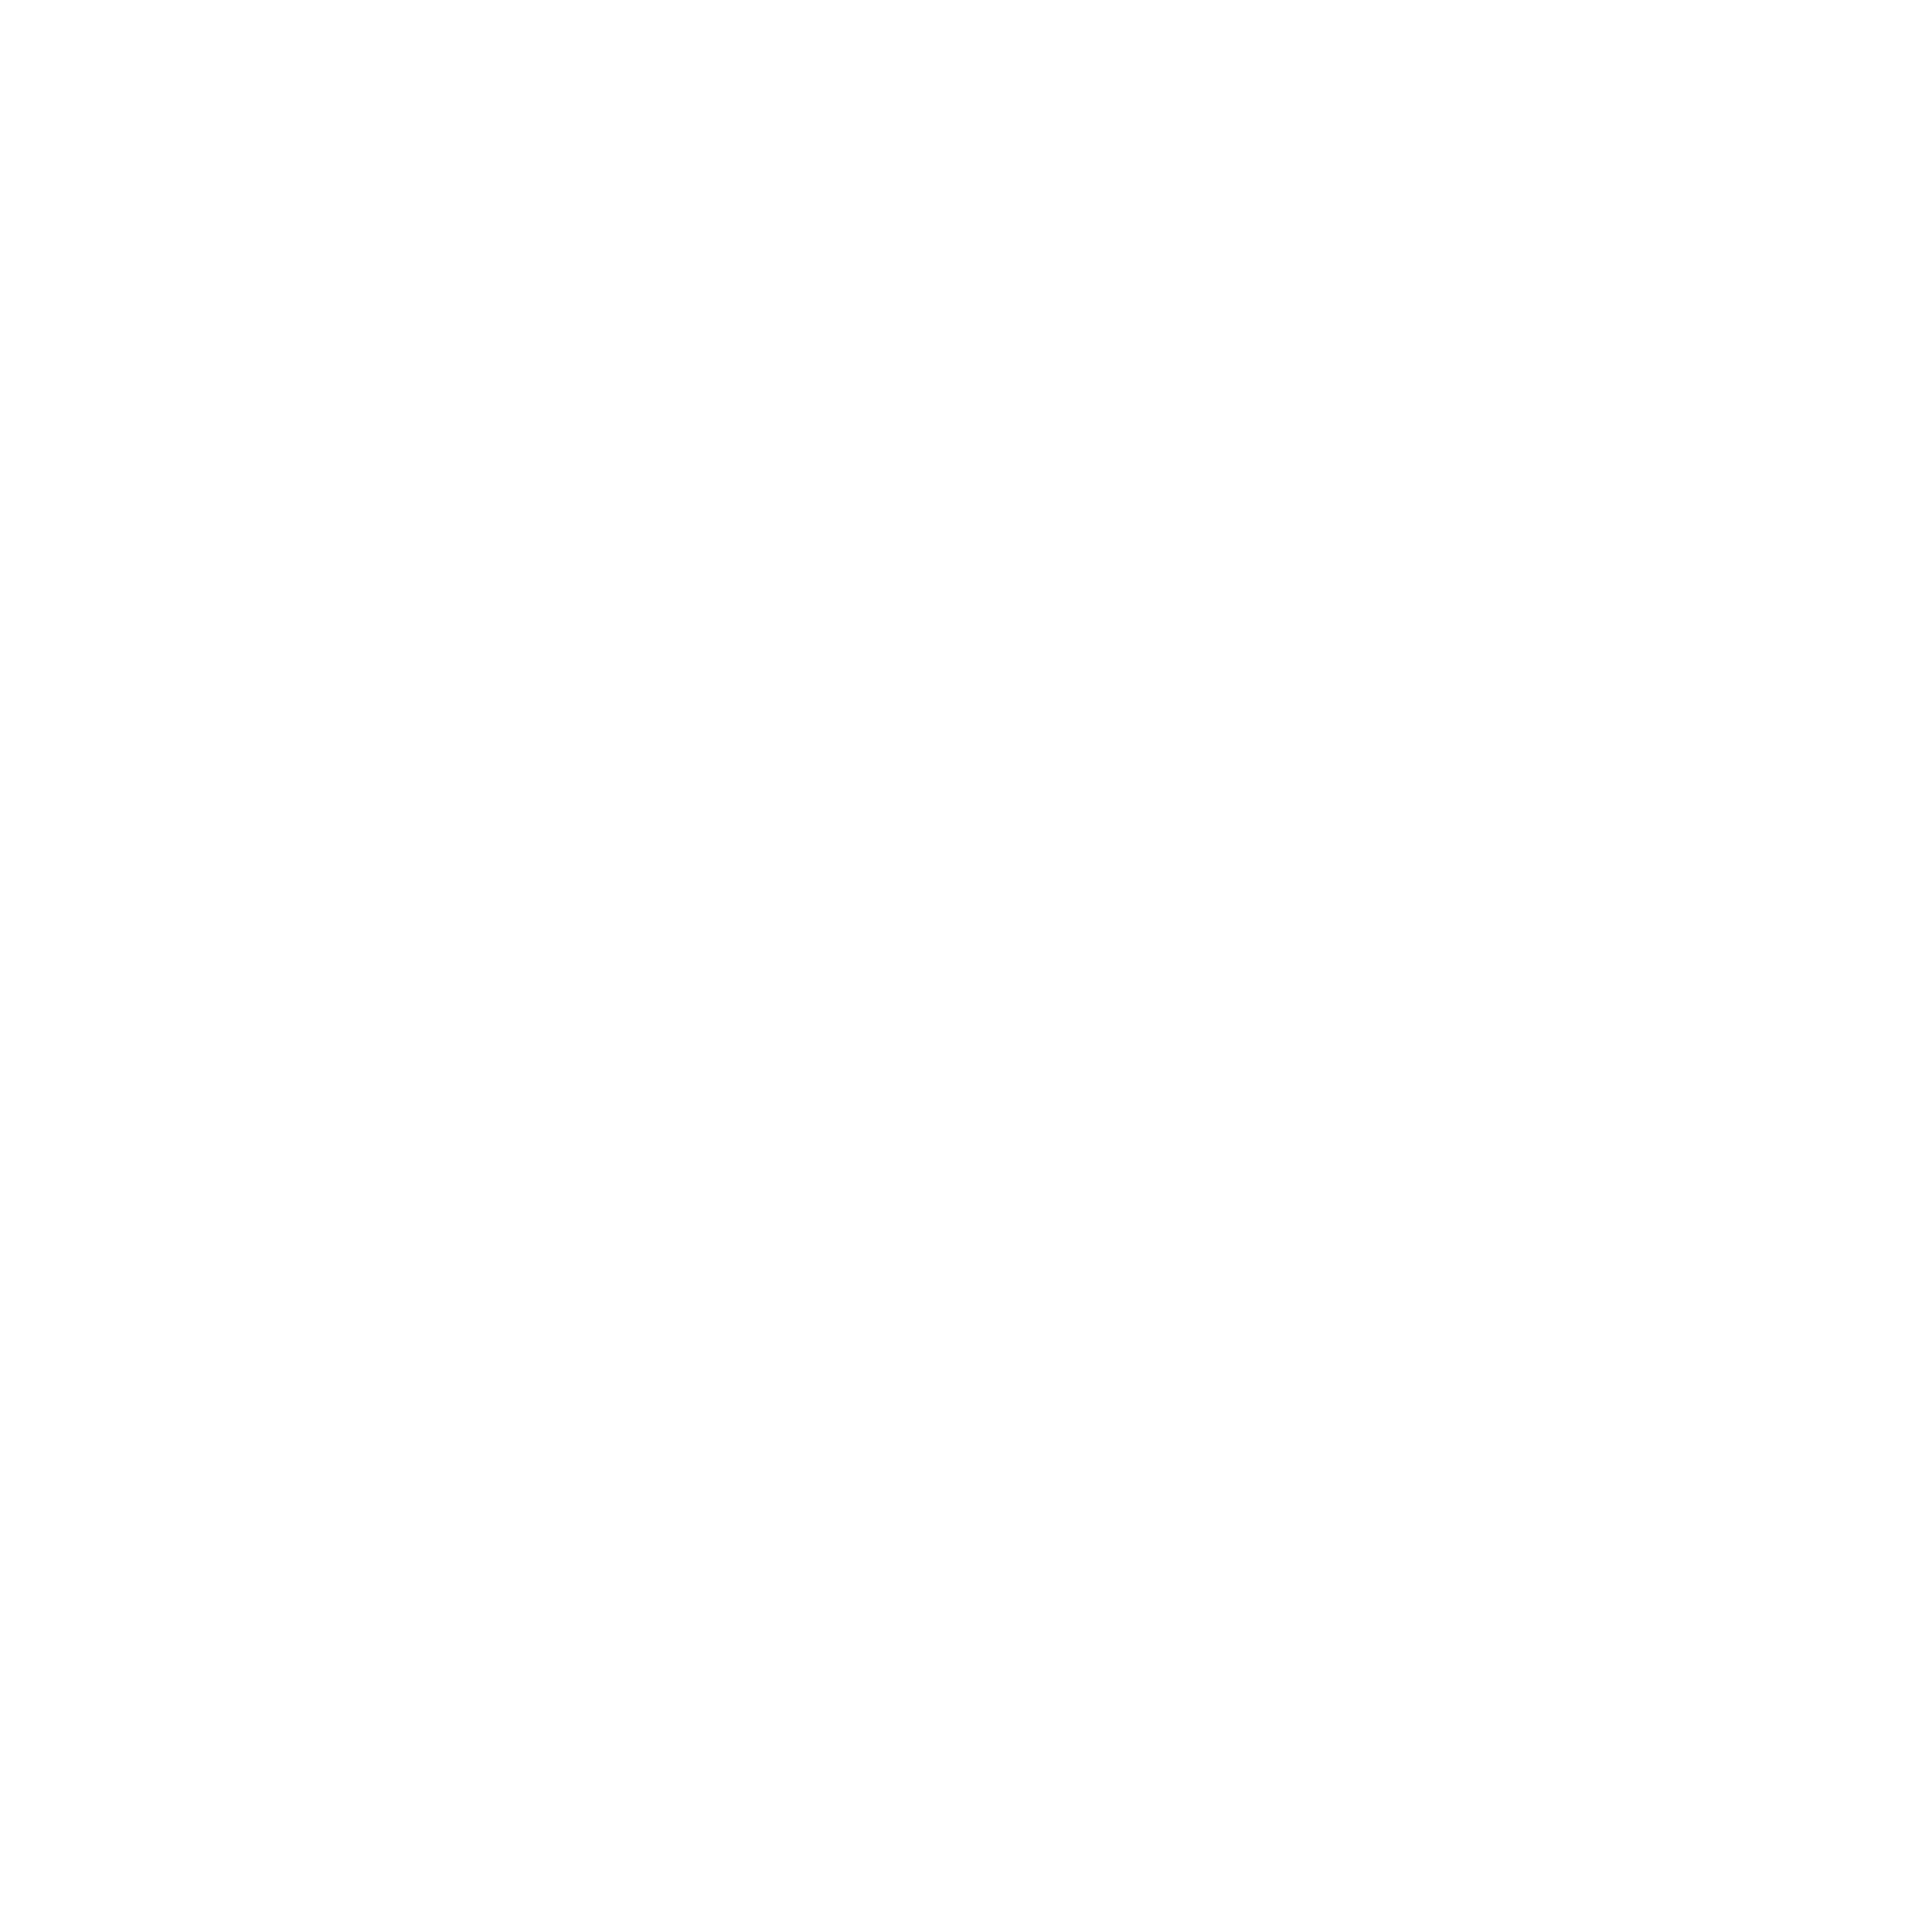 181st Street